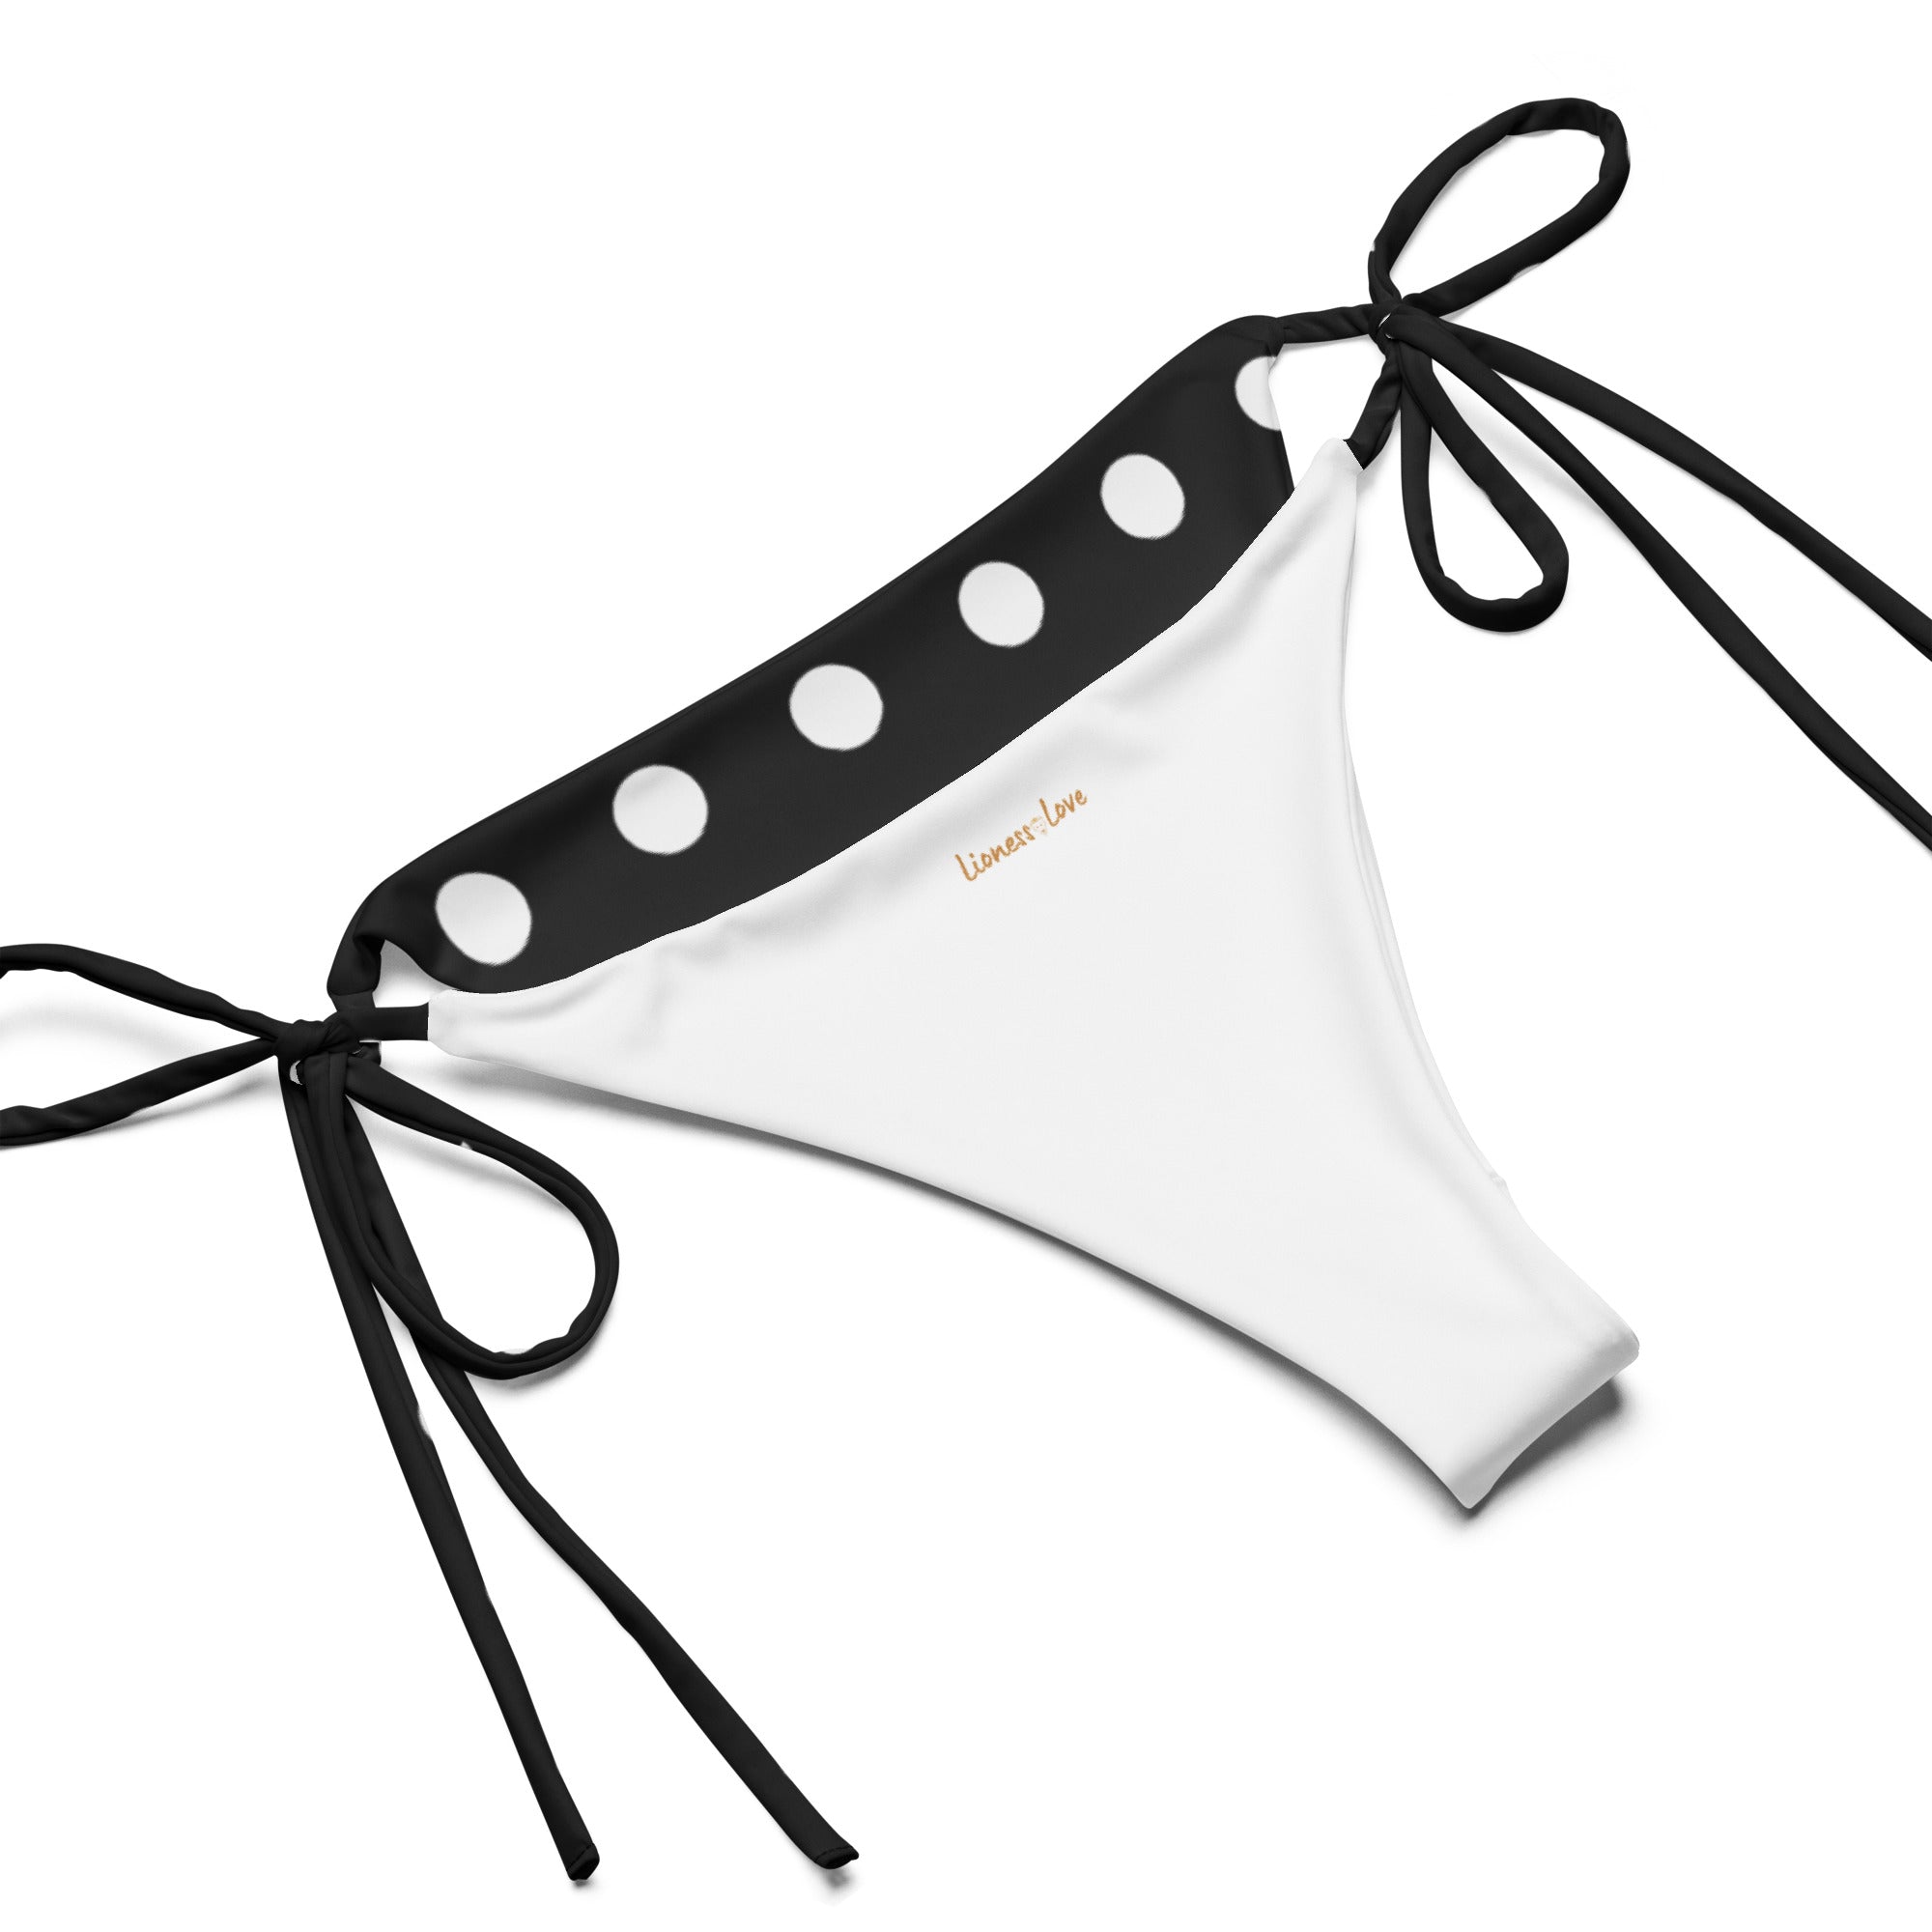 "Timeless Elegance: Classic Black and White Polka Dot String Bikini", lioness-love.com